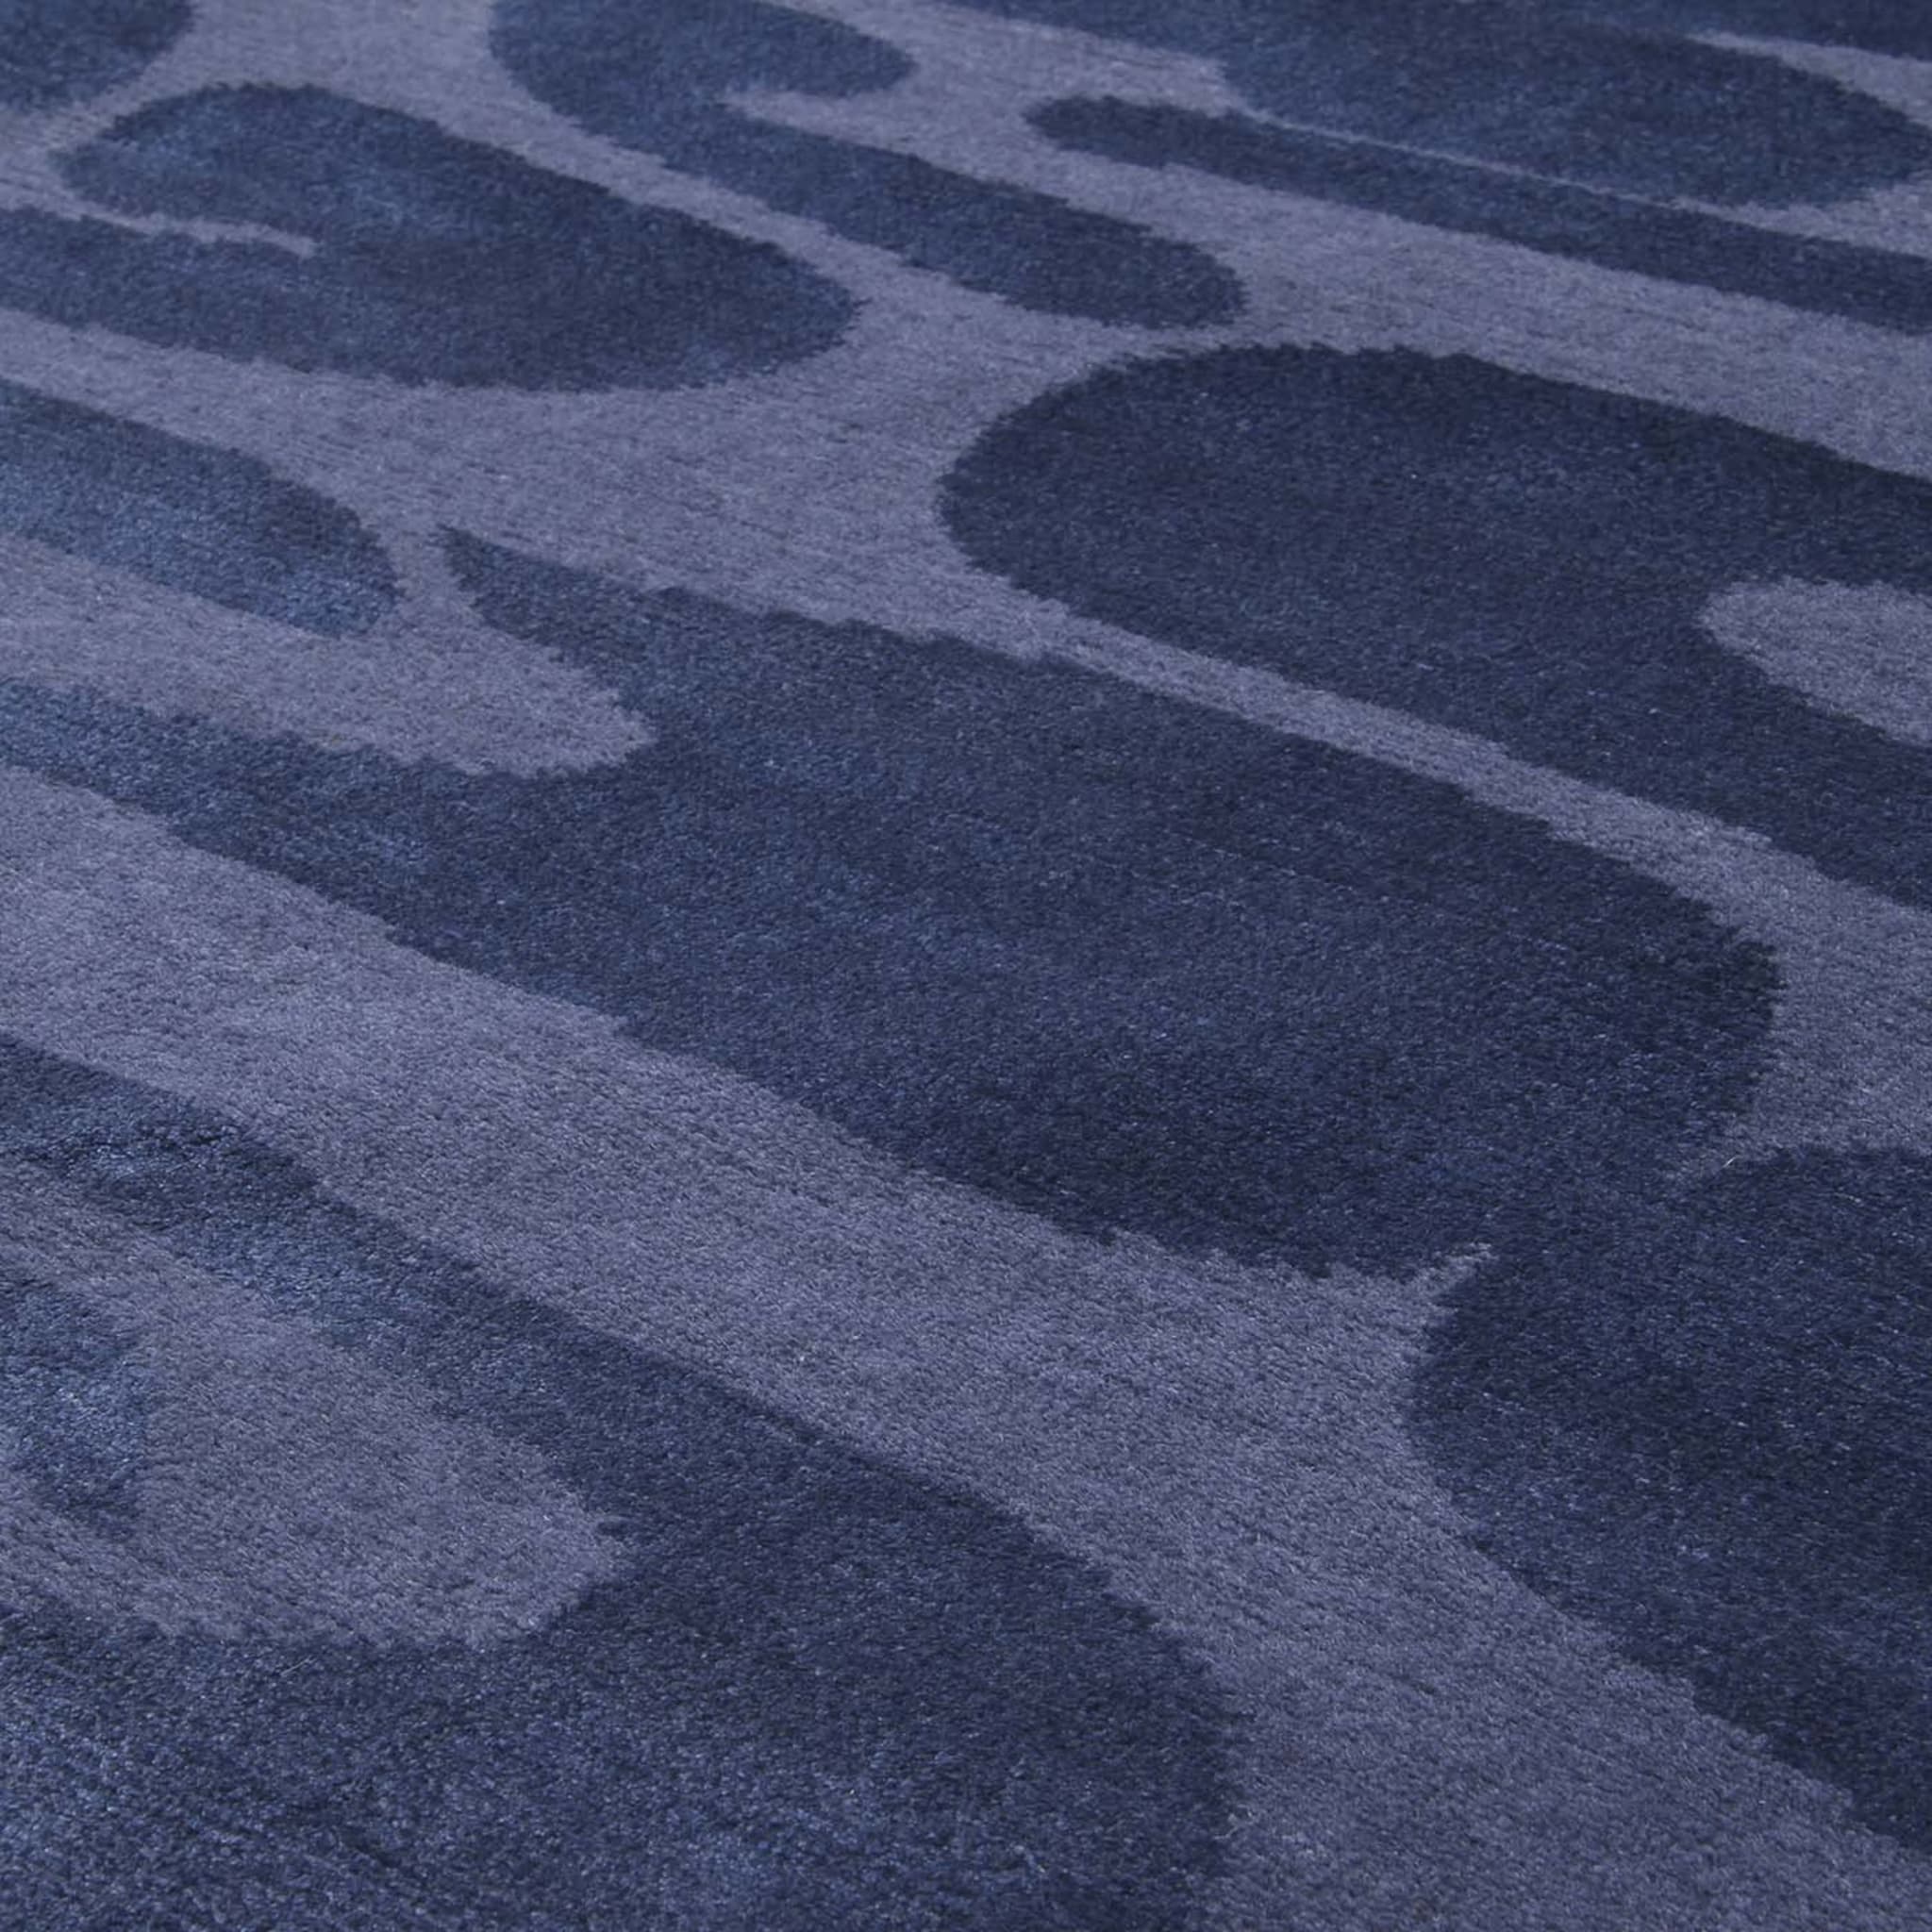 Onde Blue Carpet by Ico Parisi - Alternative view 1